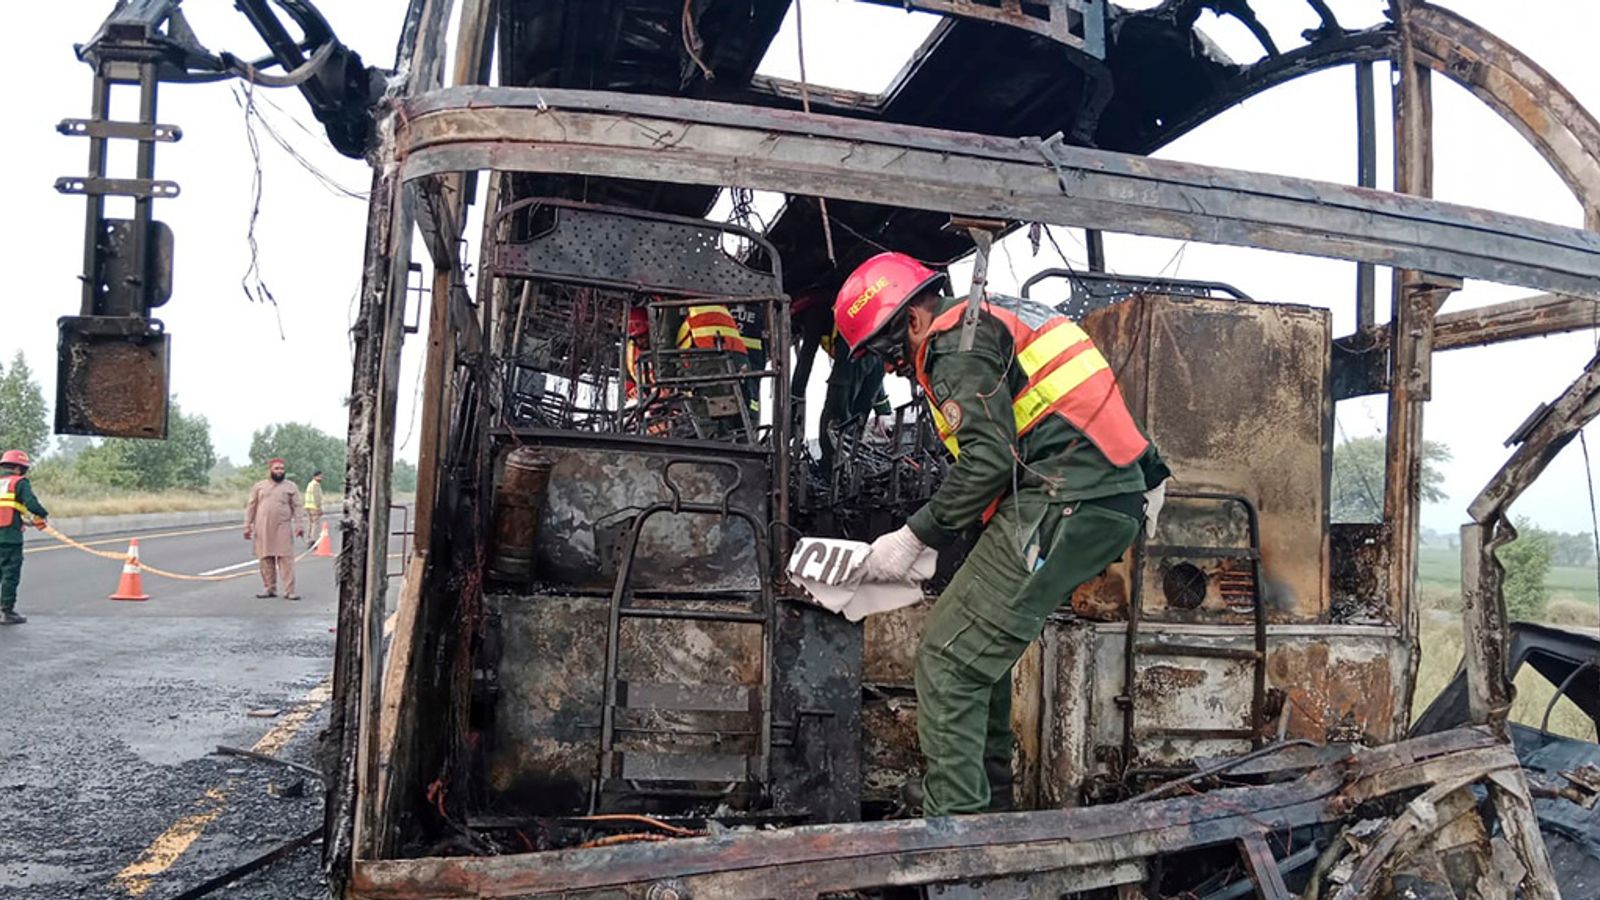 Pakistan bus crash kills at least 20 as vehicle bursts into flames on motorway hard shoulder